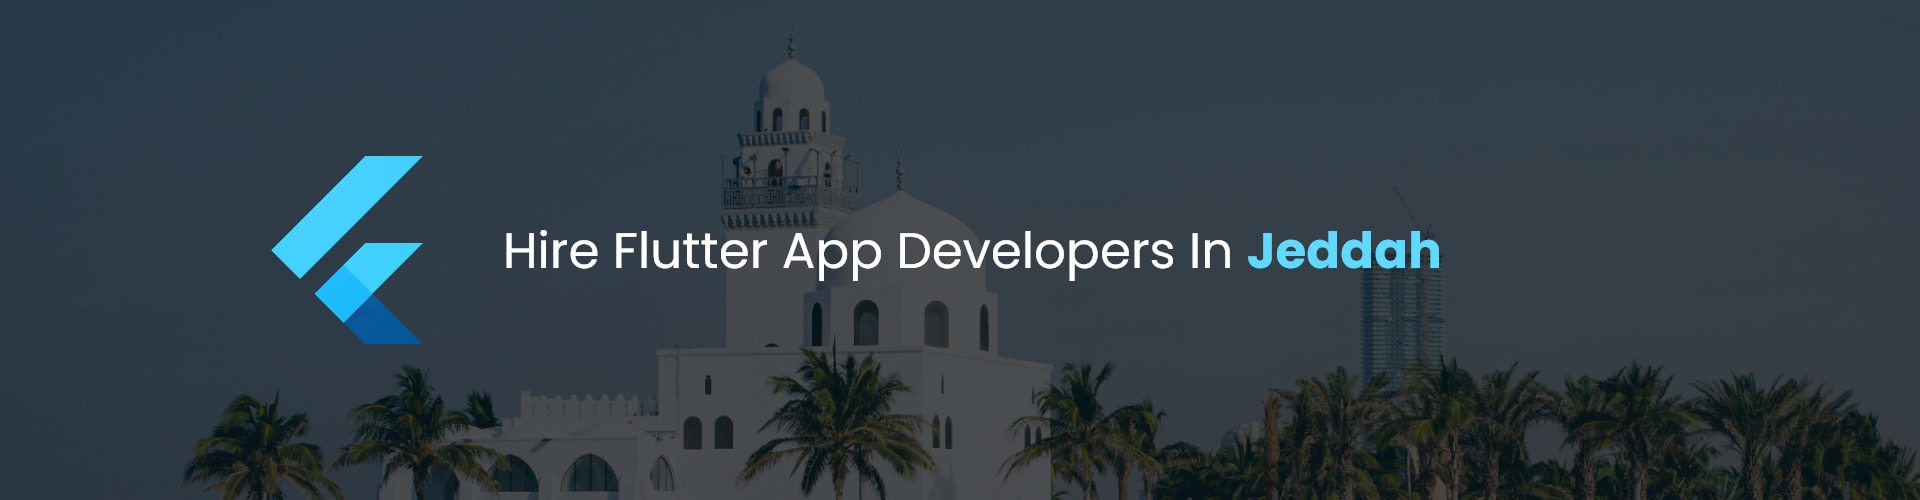 hire flutter app developers in jeddah